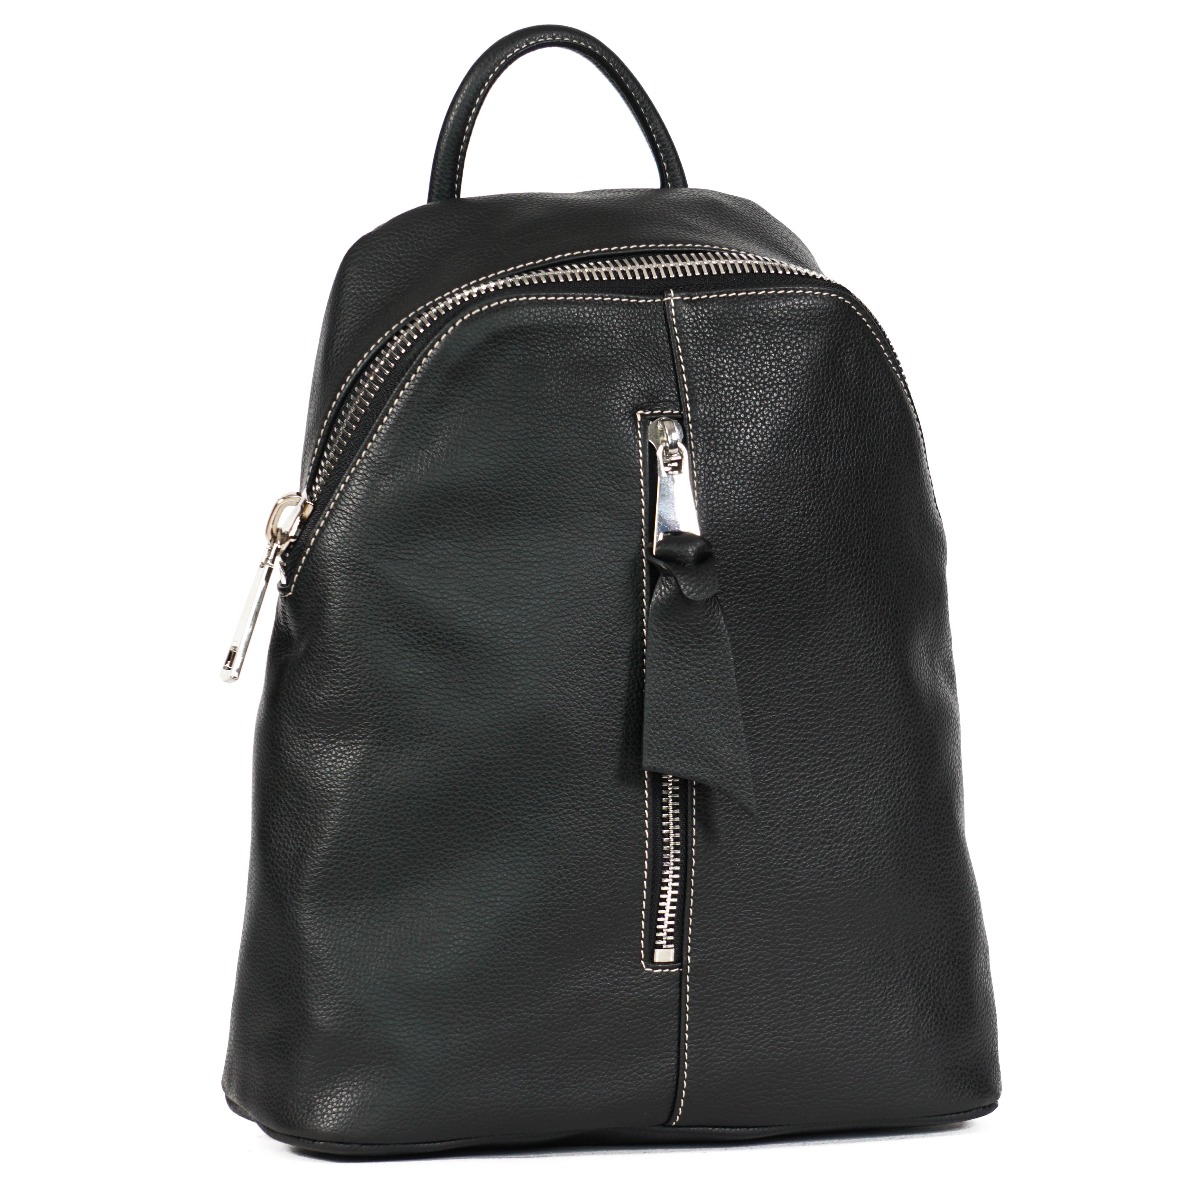 Black genuine leather women backpack with big zipper